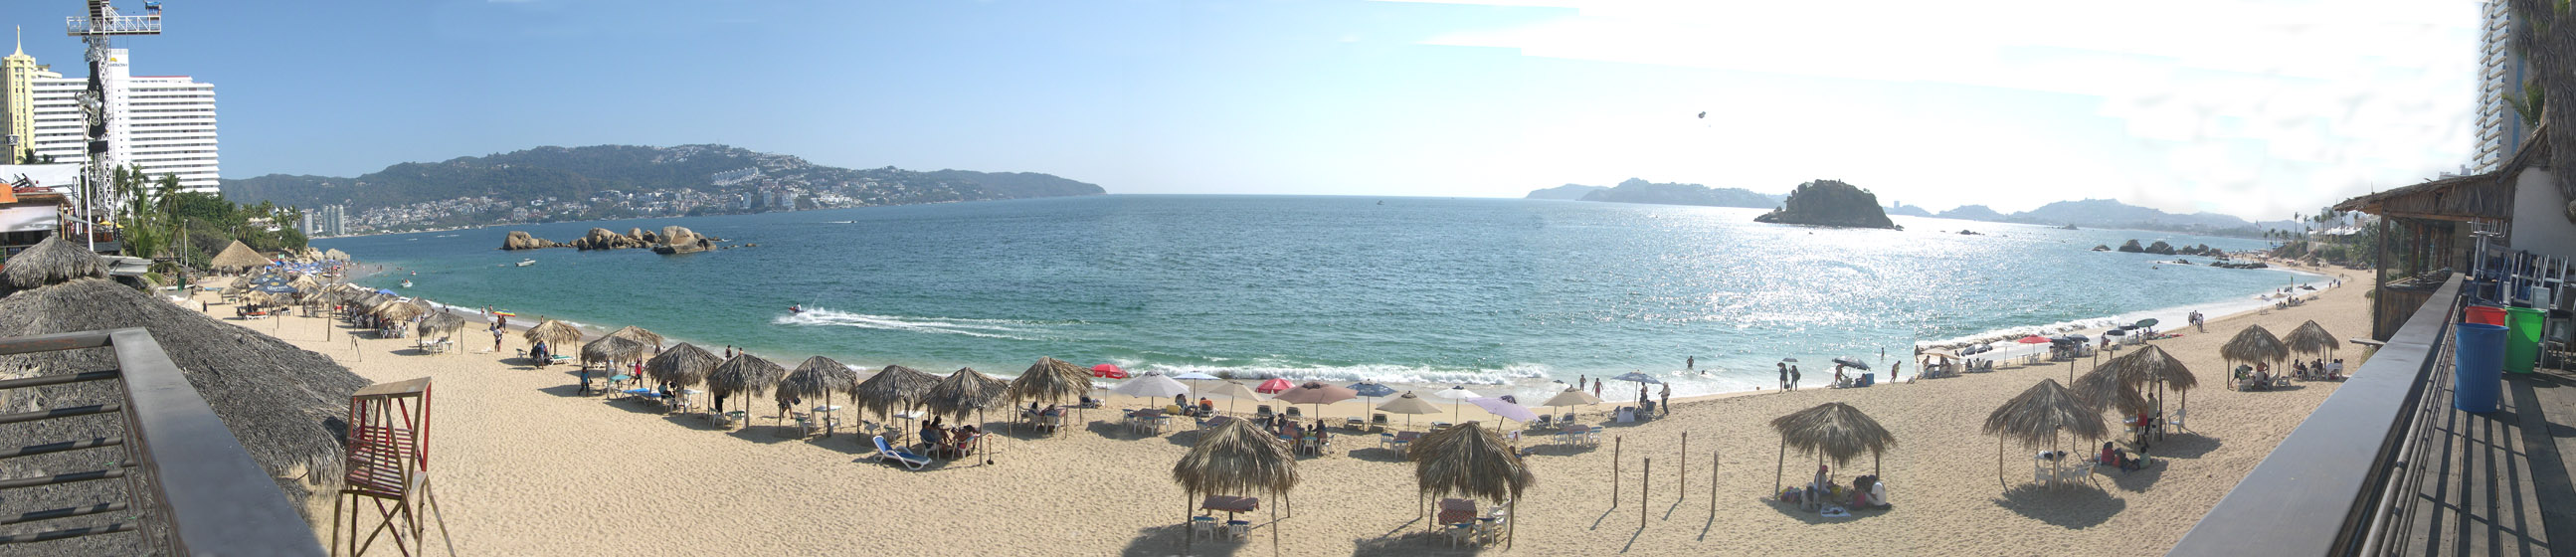 Acapulco Bay - Panorama